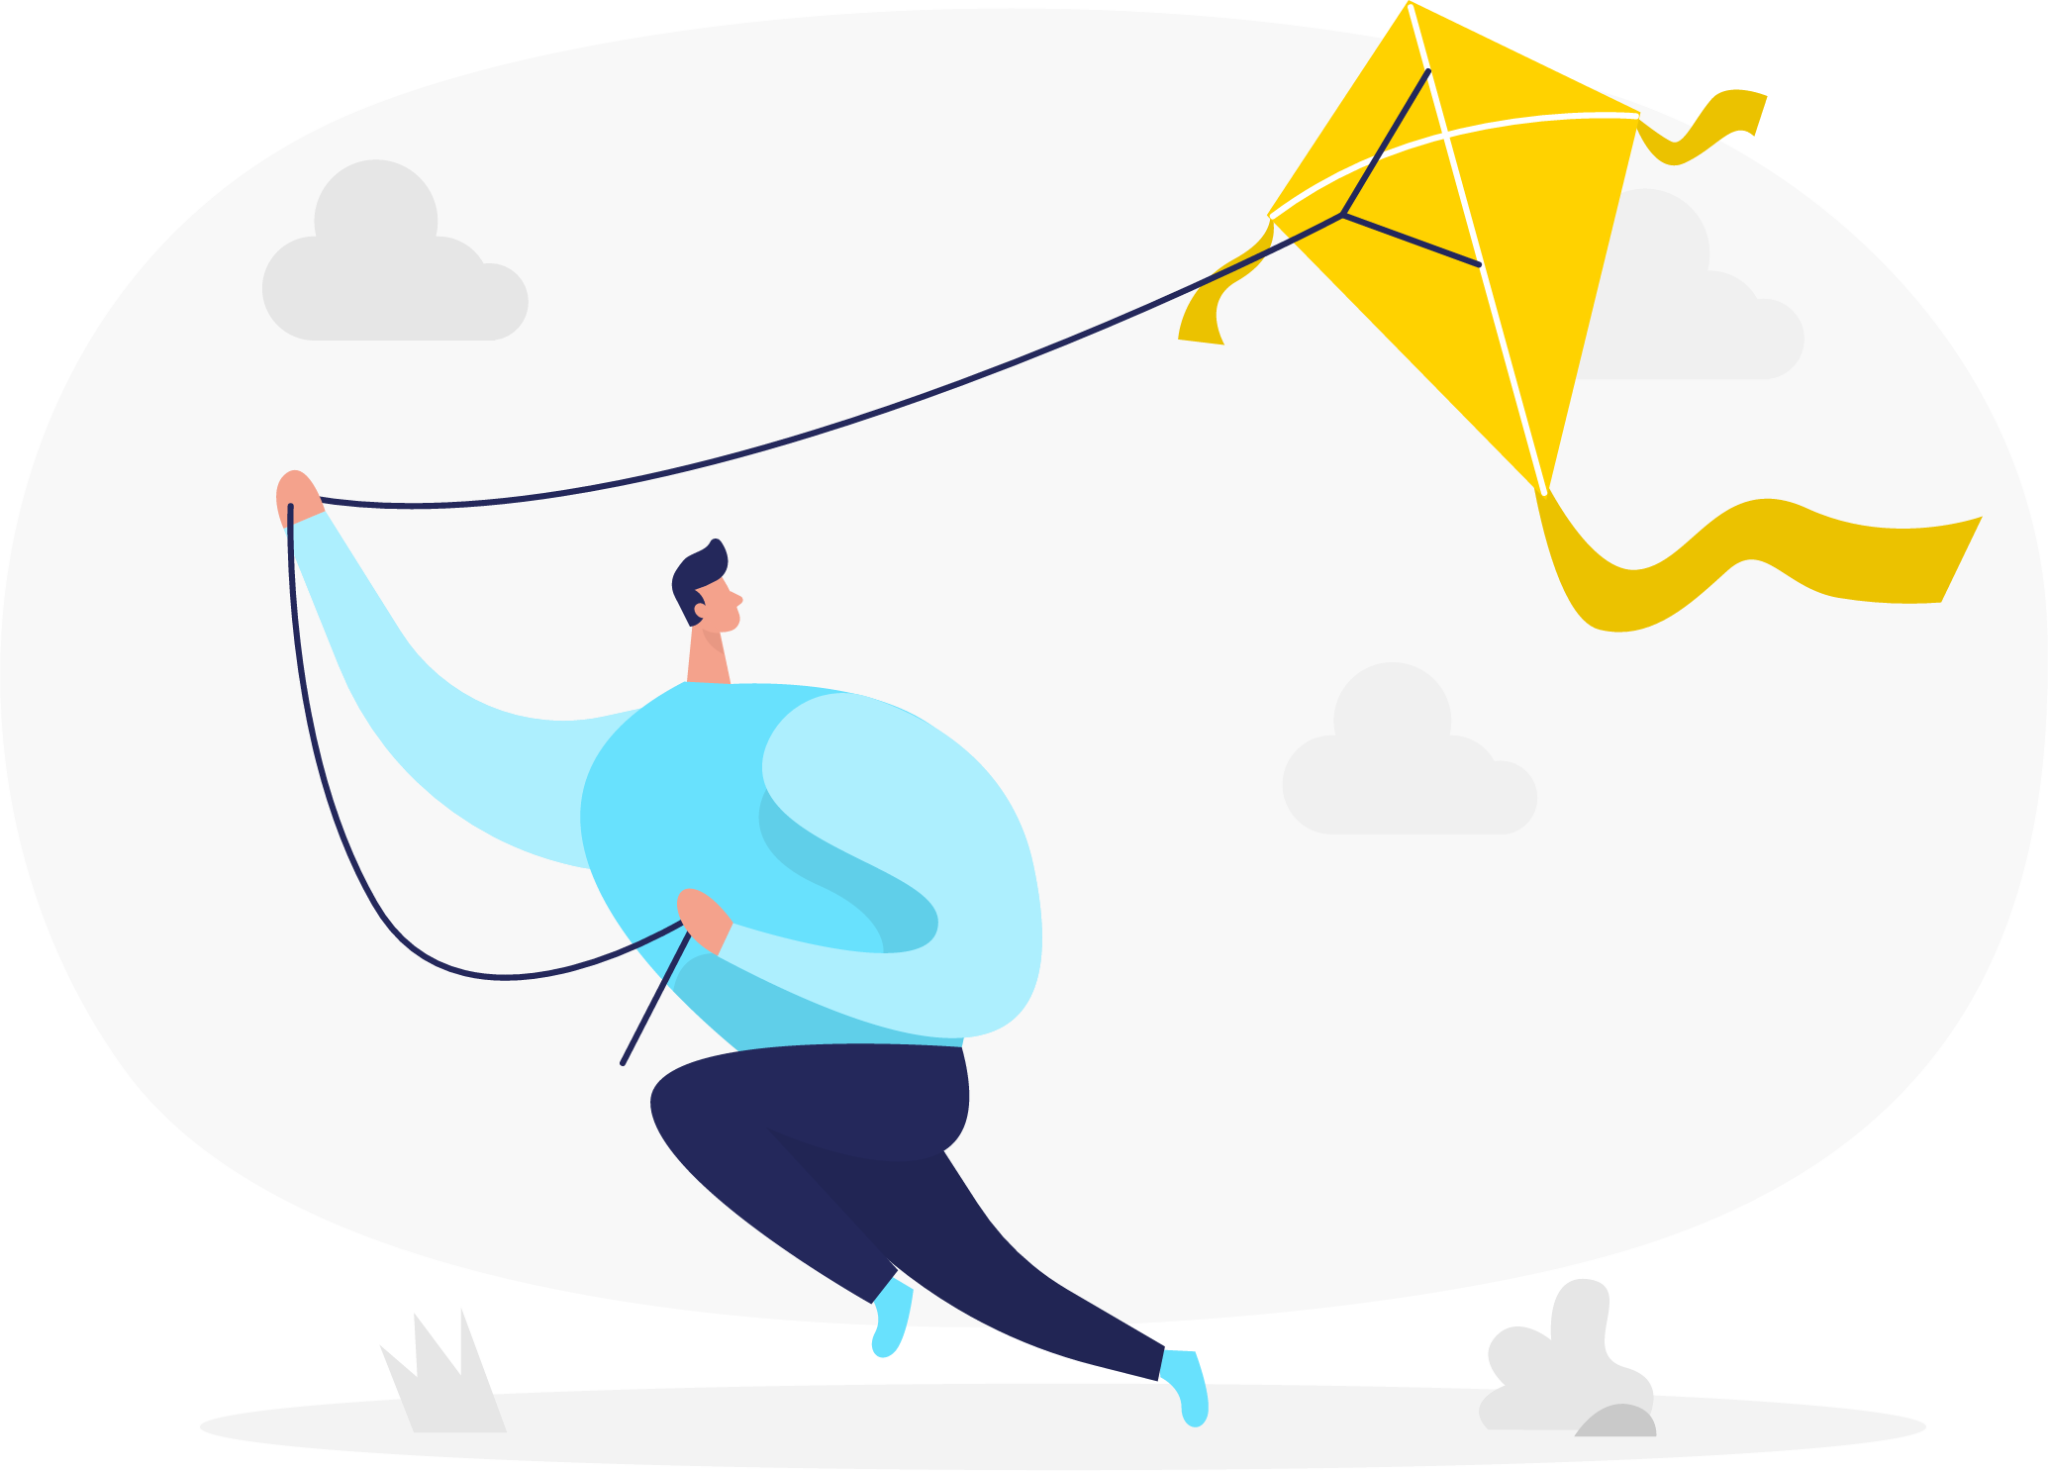 Flying kite illustration